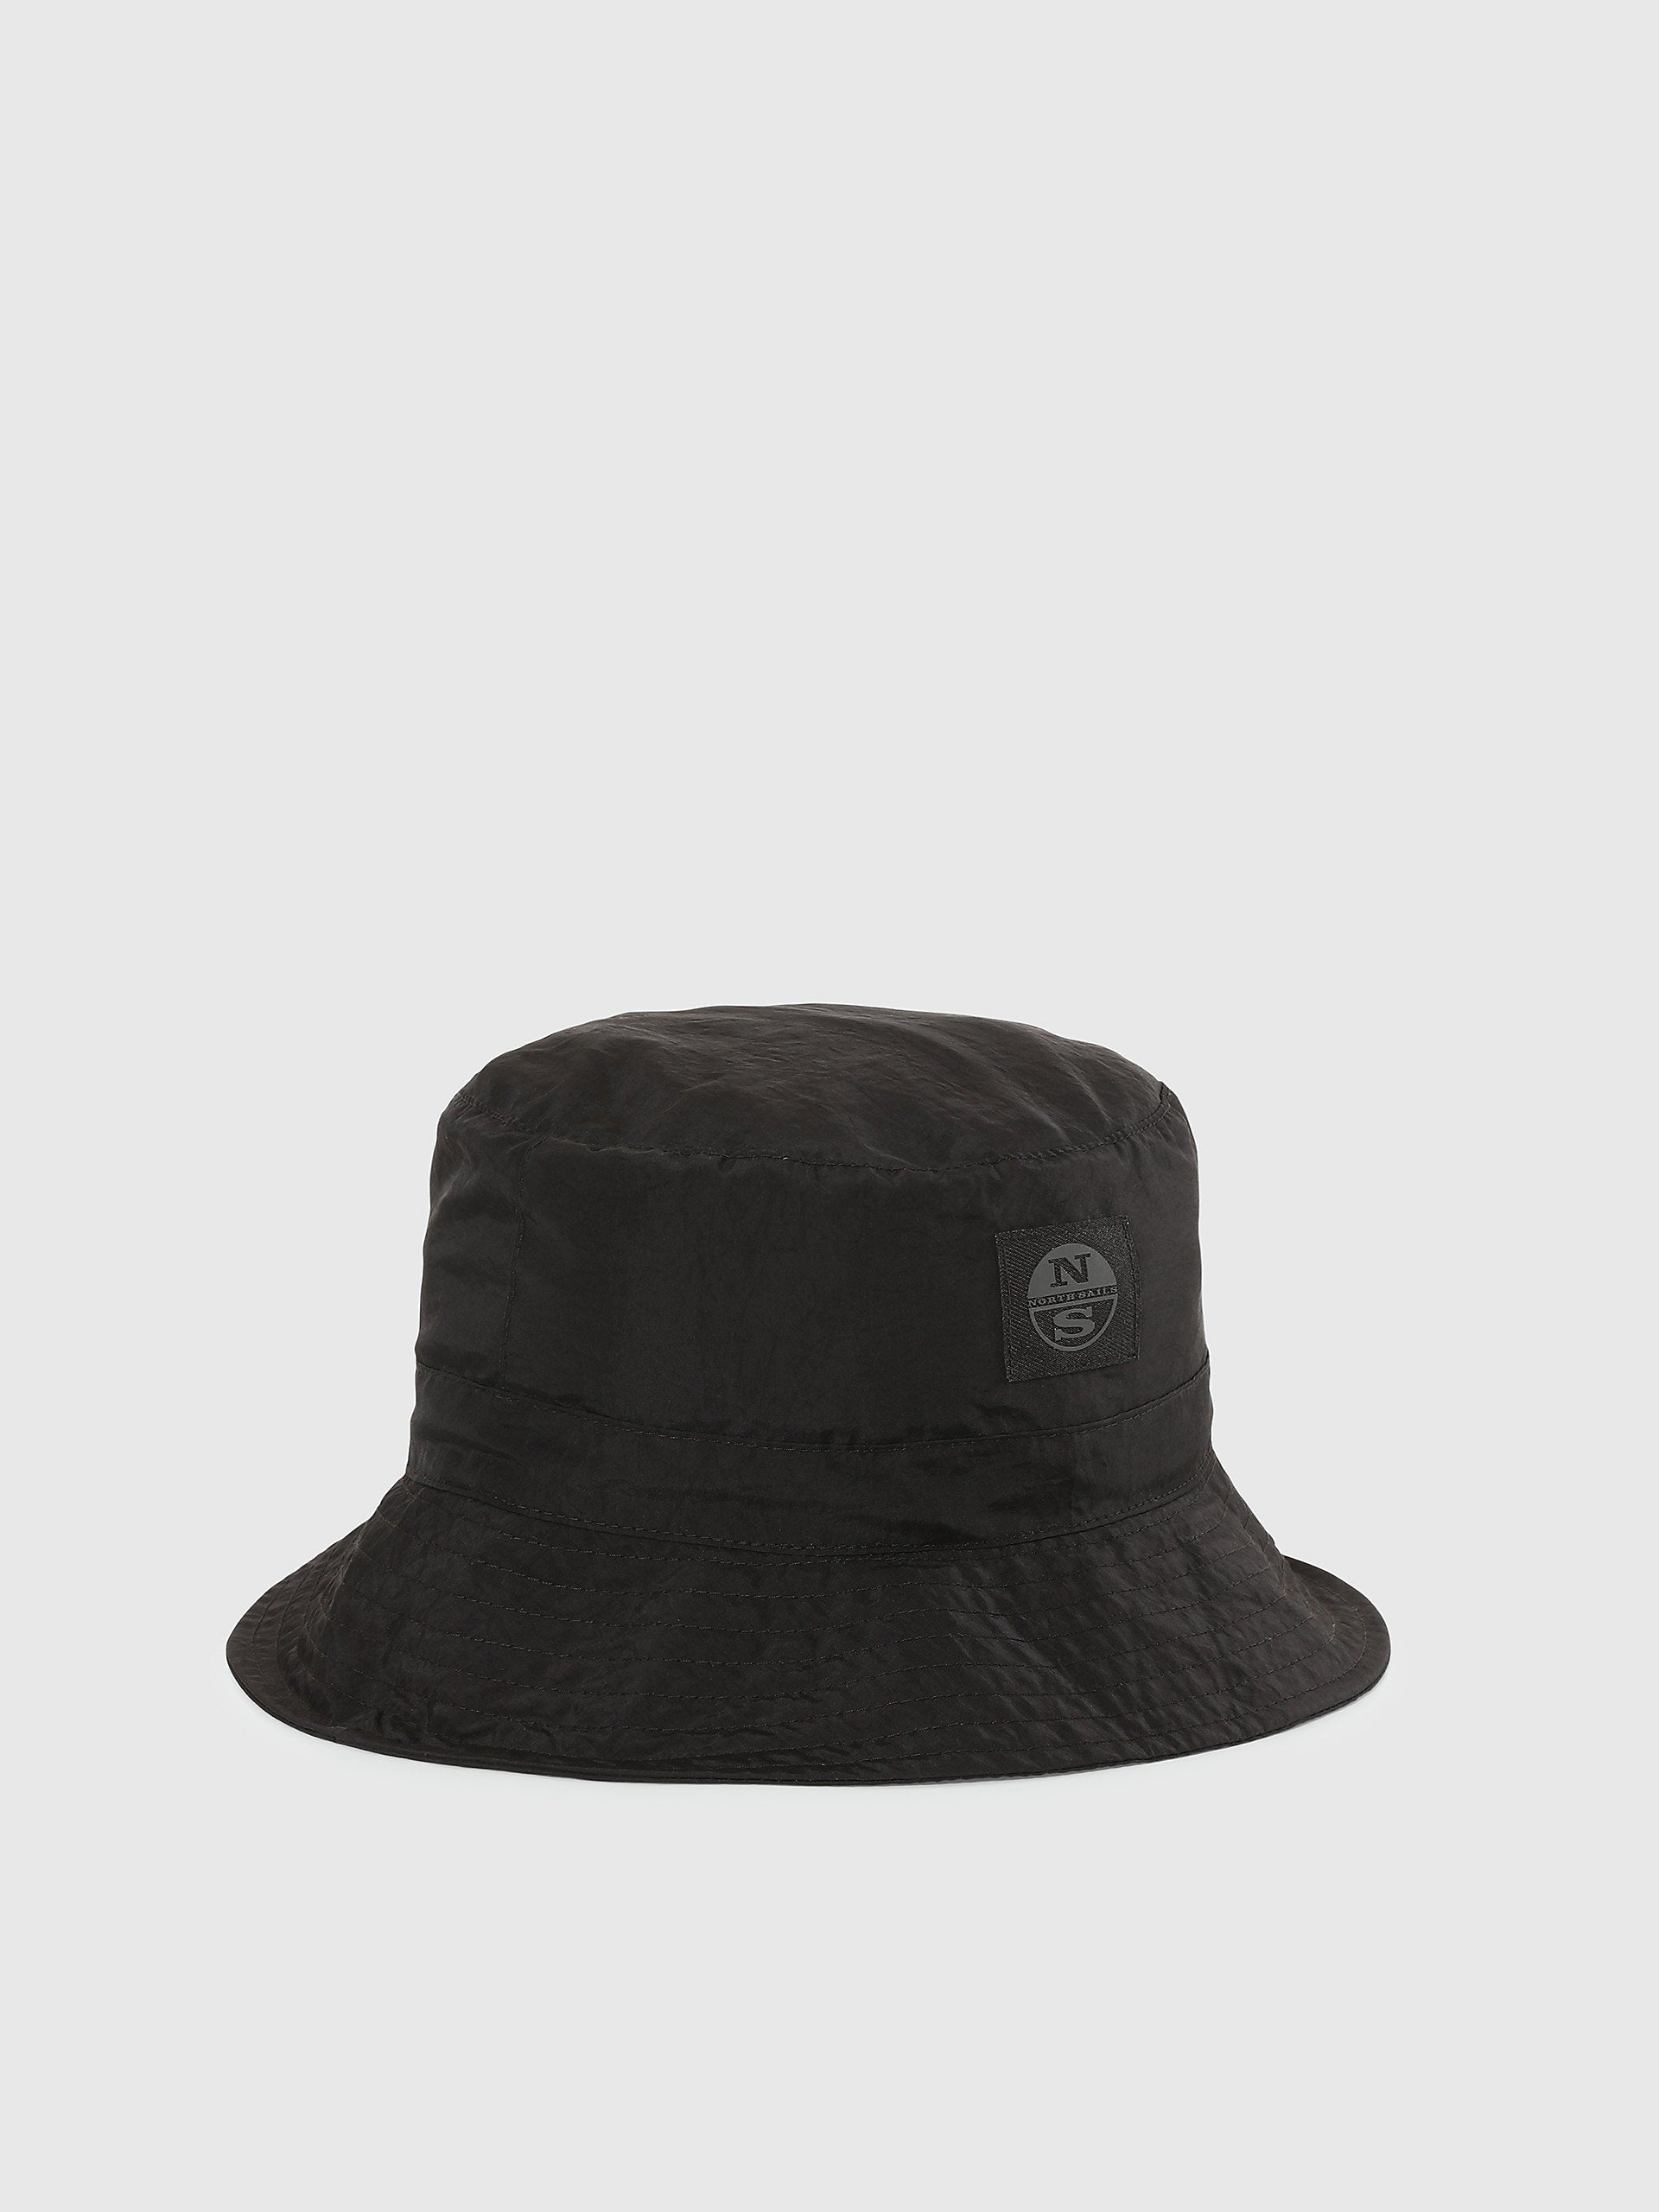 Nylon fisherman's hat